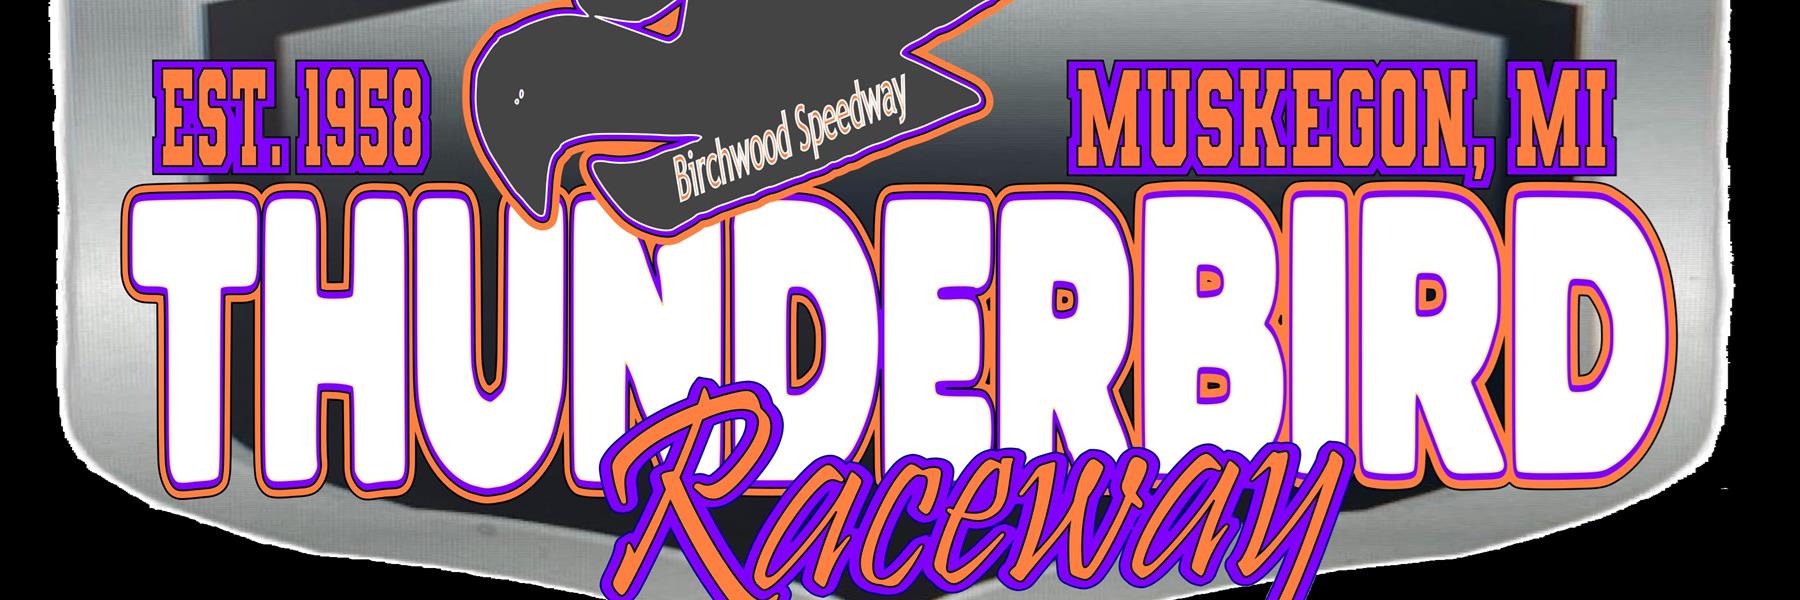 9/7/2018 - Thunderbird Raceway